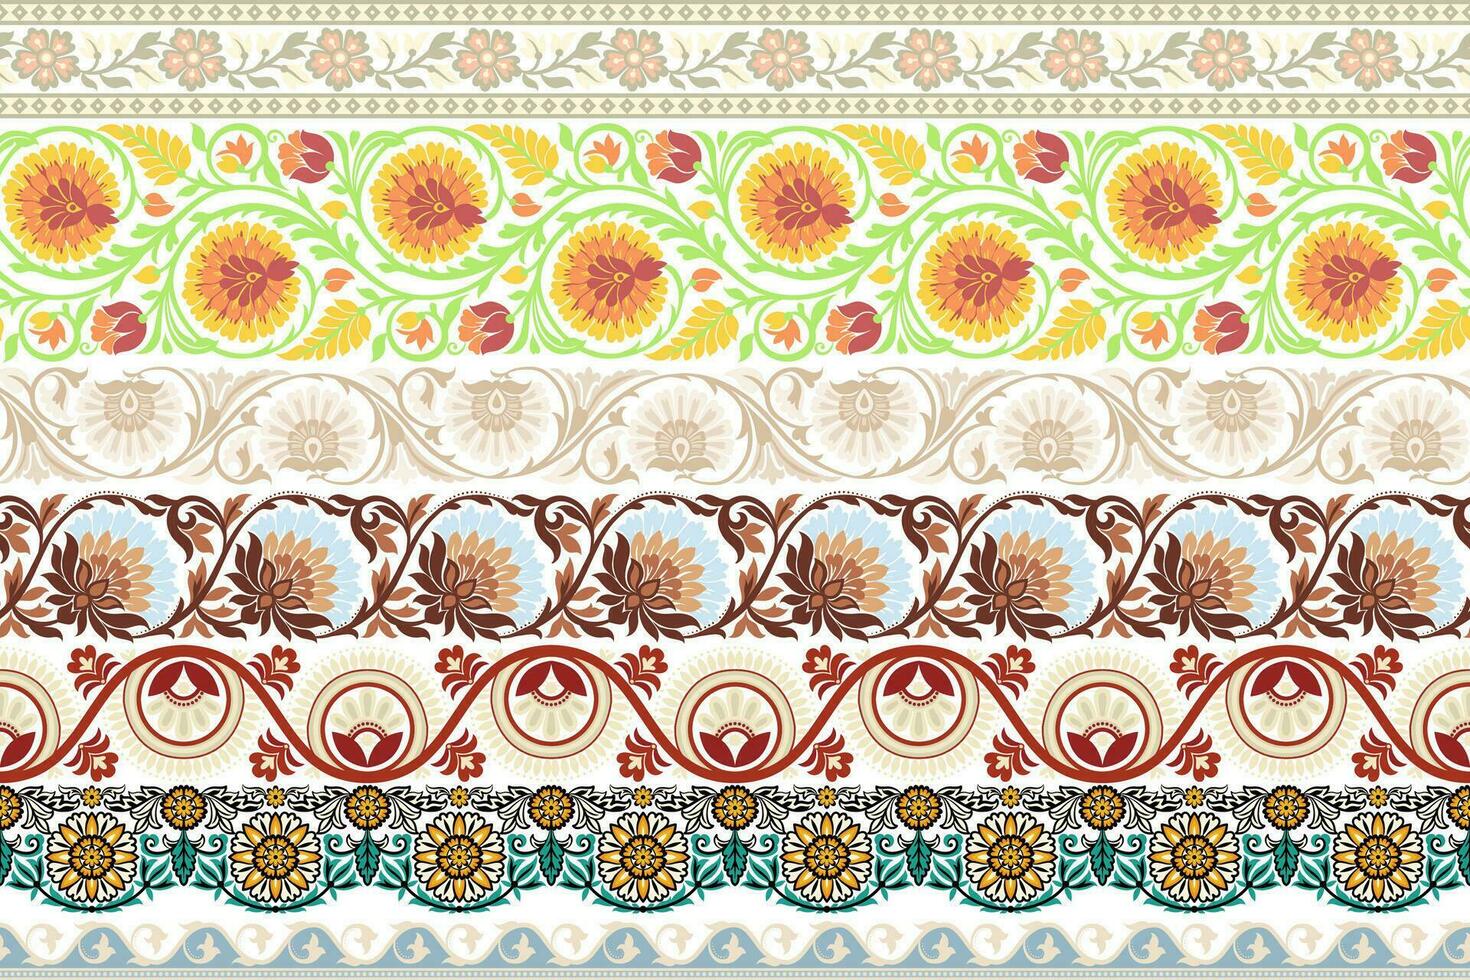 conjunto floral desatado fundo geométrico étnico oriental ikat desatado padronizar tradicional Projeto para plano de fundo,tapete,papel de parede,vestuário,embrulho,batik,tecido,vetor ilustração bordado estilo. vetor